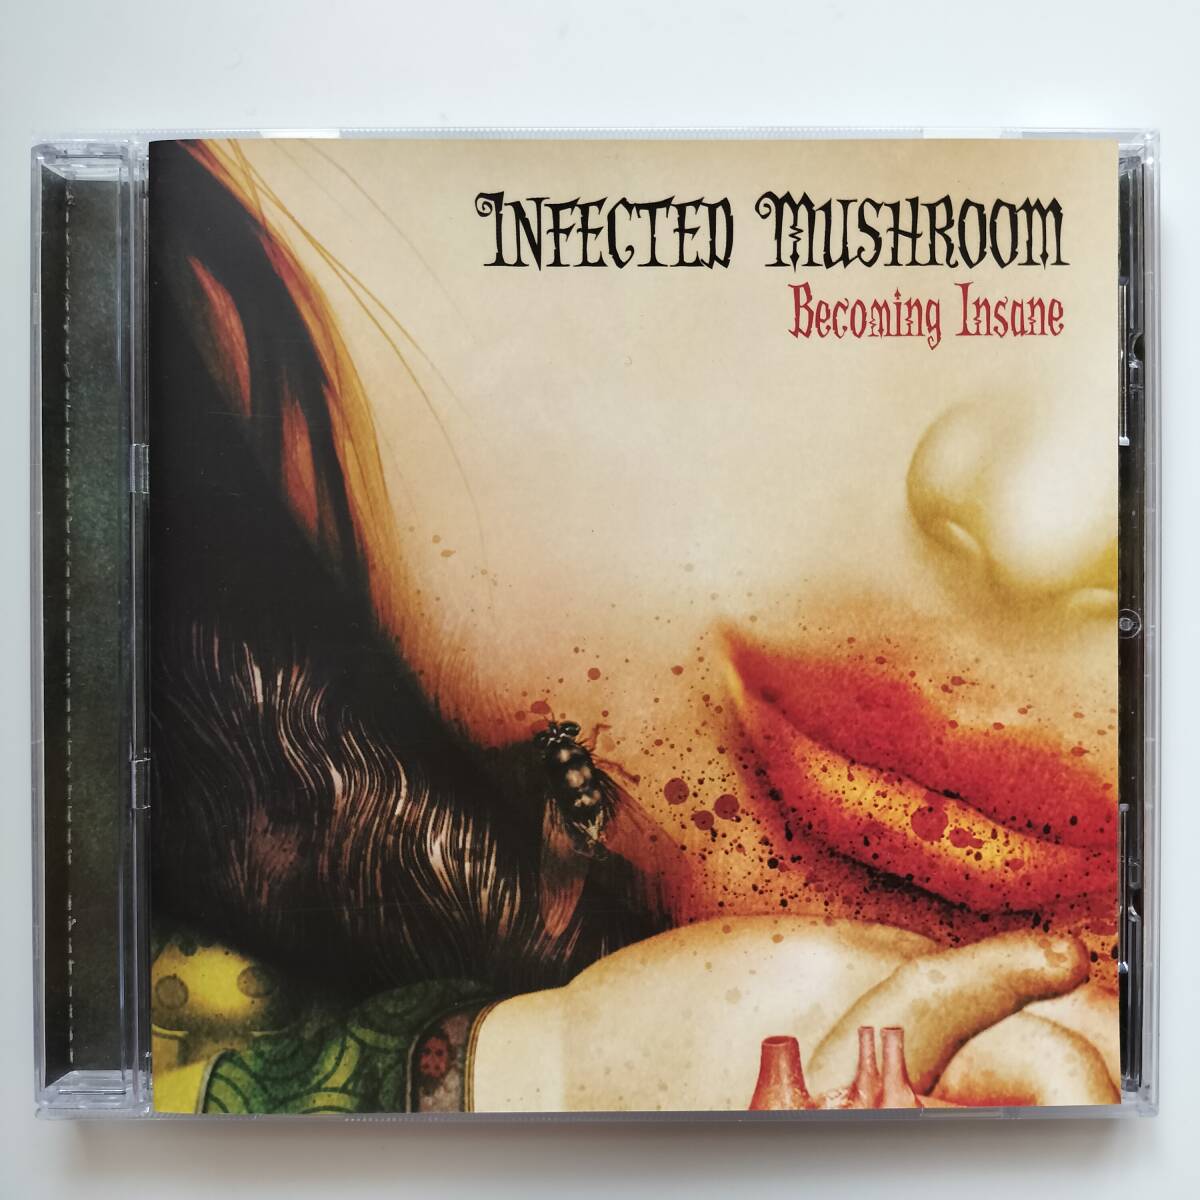 INFECTED MUSHROOM becoming Insane 2007 YOYO records YOYOCS12 psychedelic trance_画像1